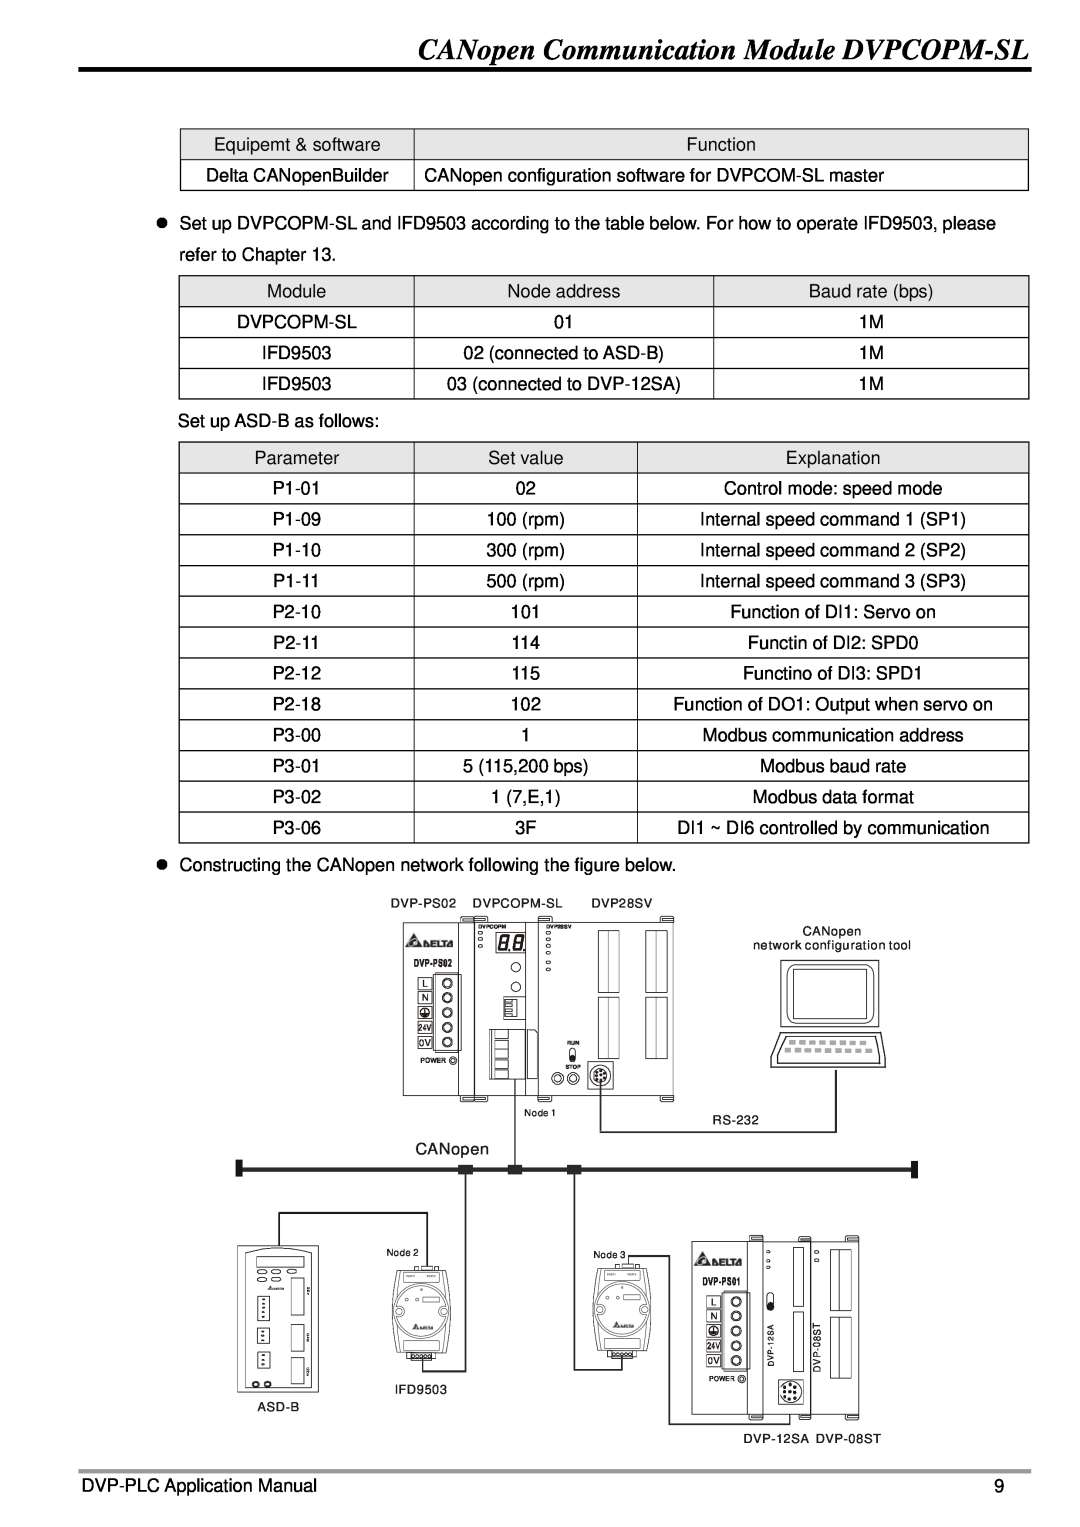 Delta Electronics CANopen Communication Module DVPCOPM-SL, DVP-PS02 DVPCOPM-SL DVP28SV, network configuration tool 